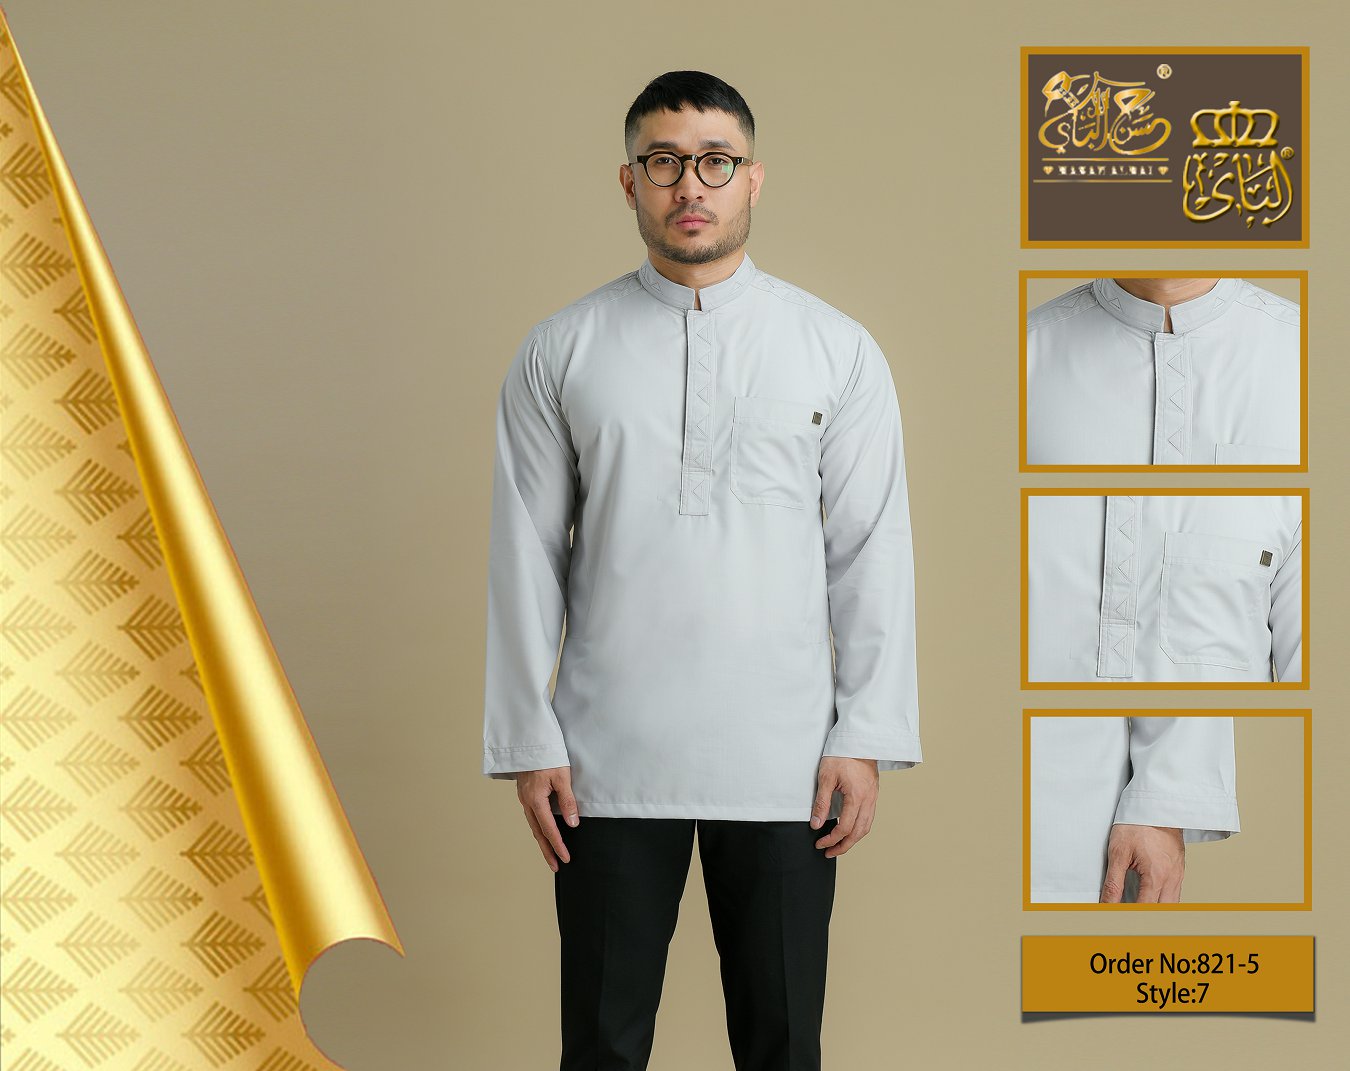 Malay clothing28